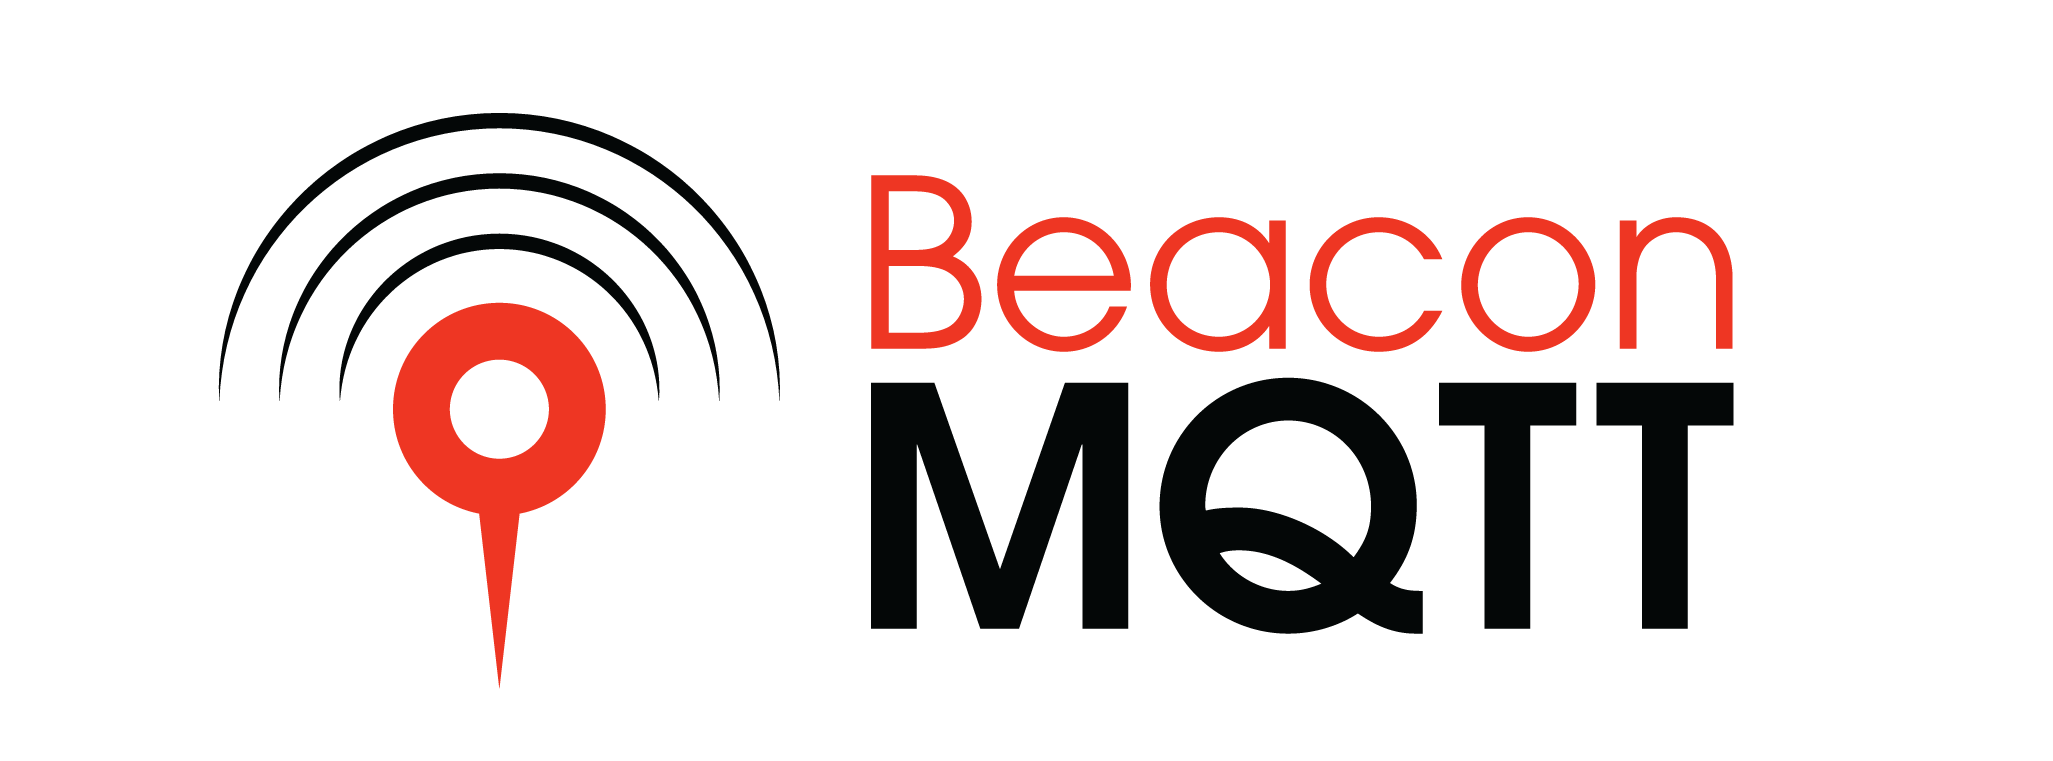 BeaconMQTT Logo